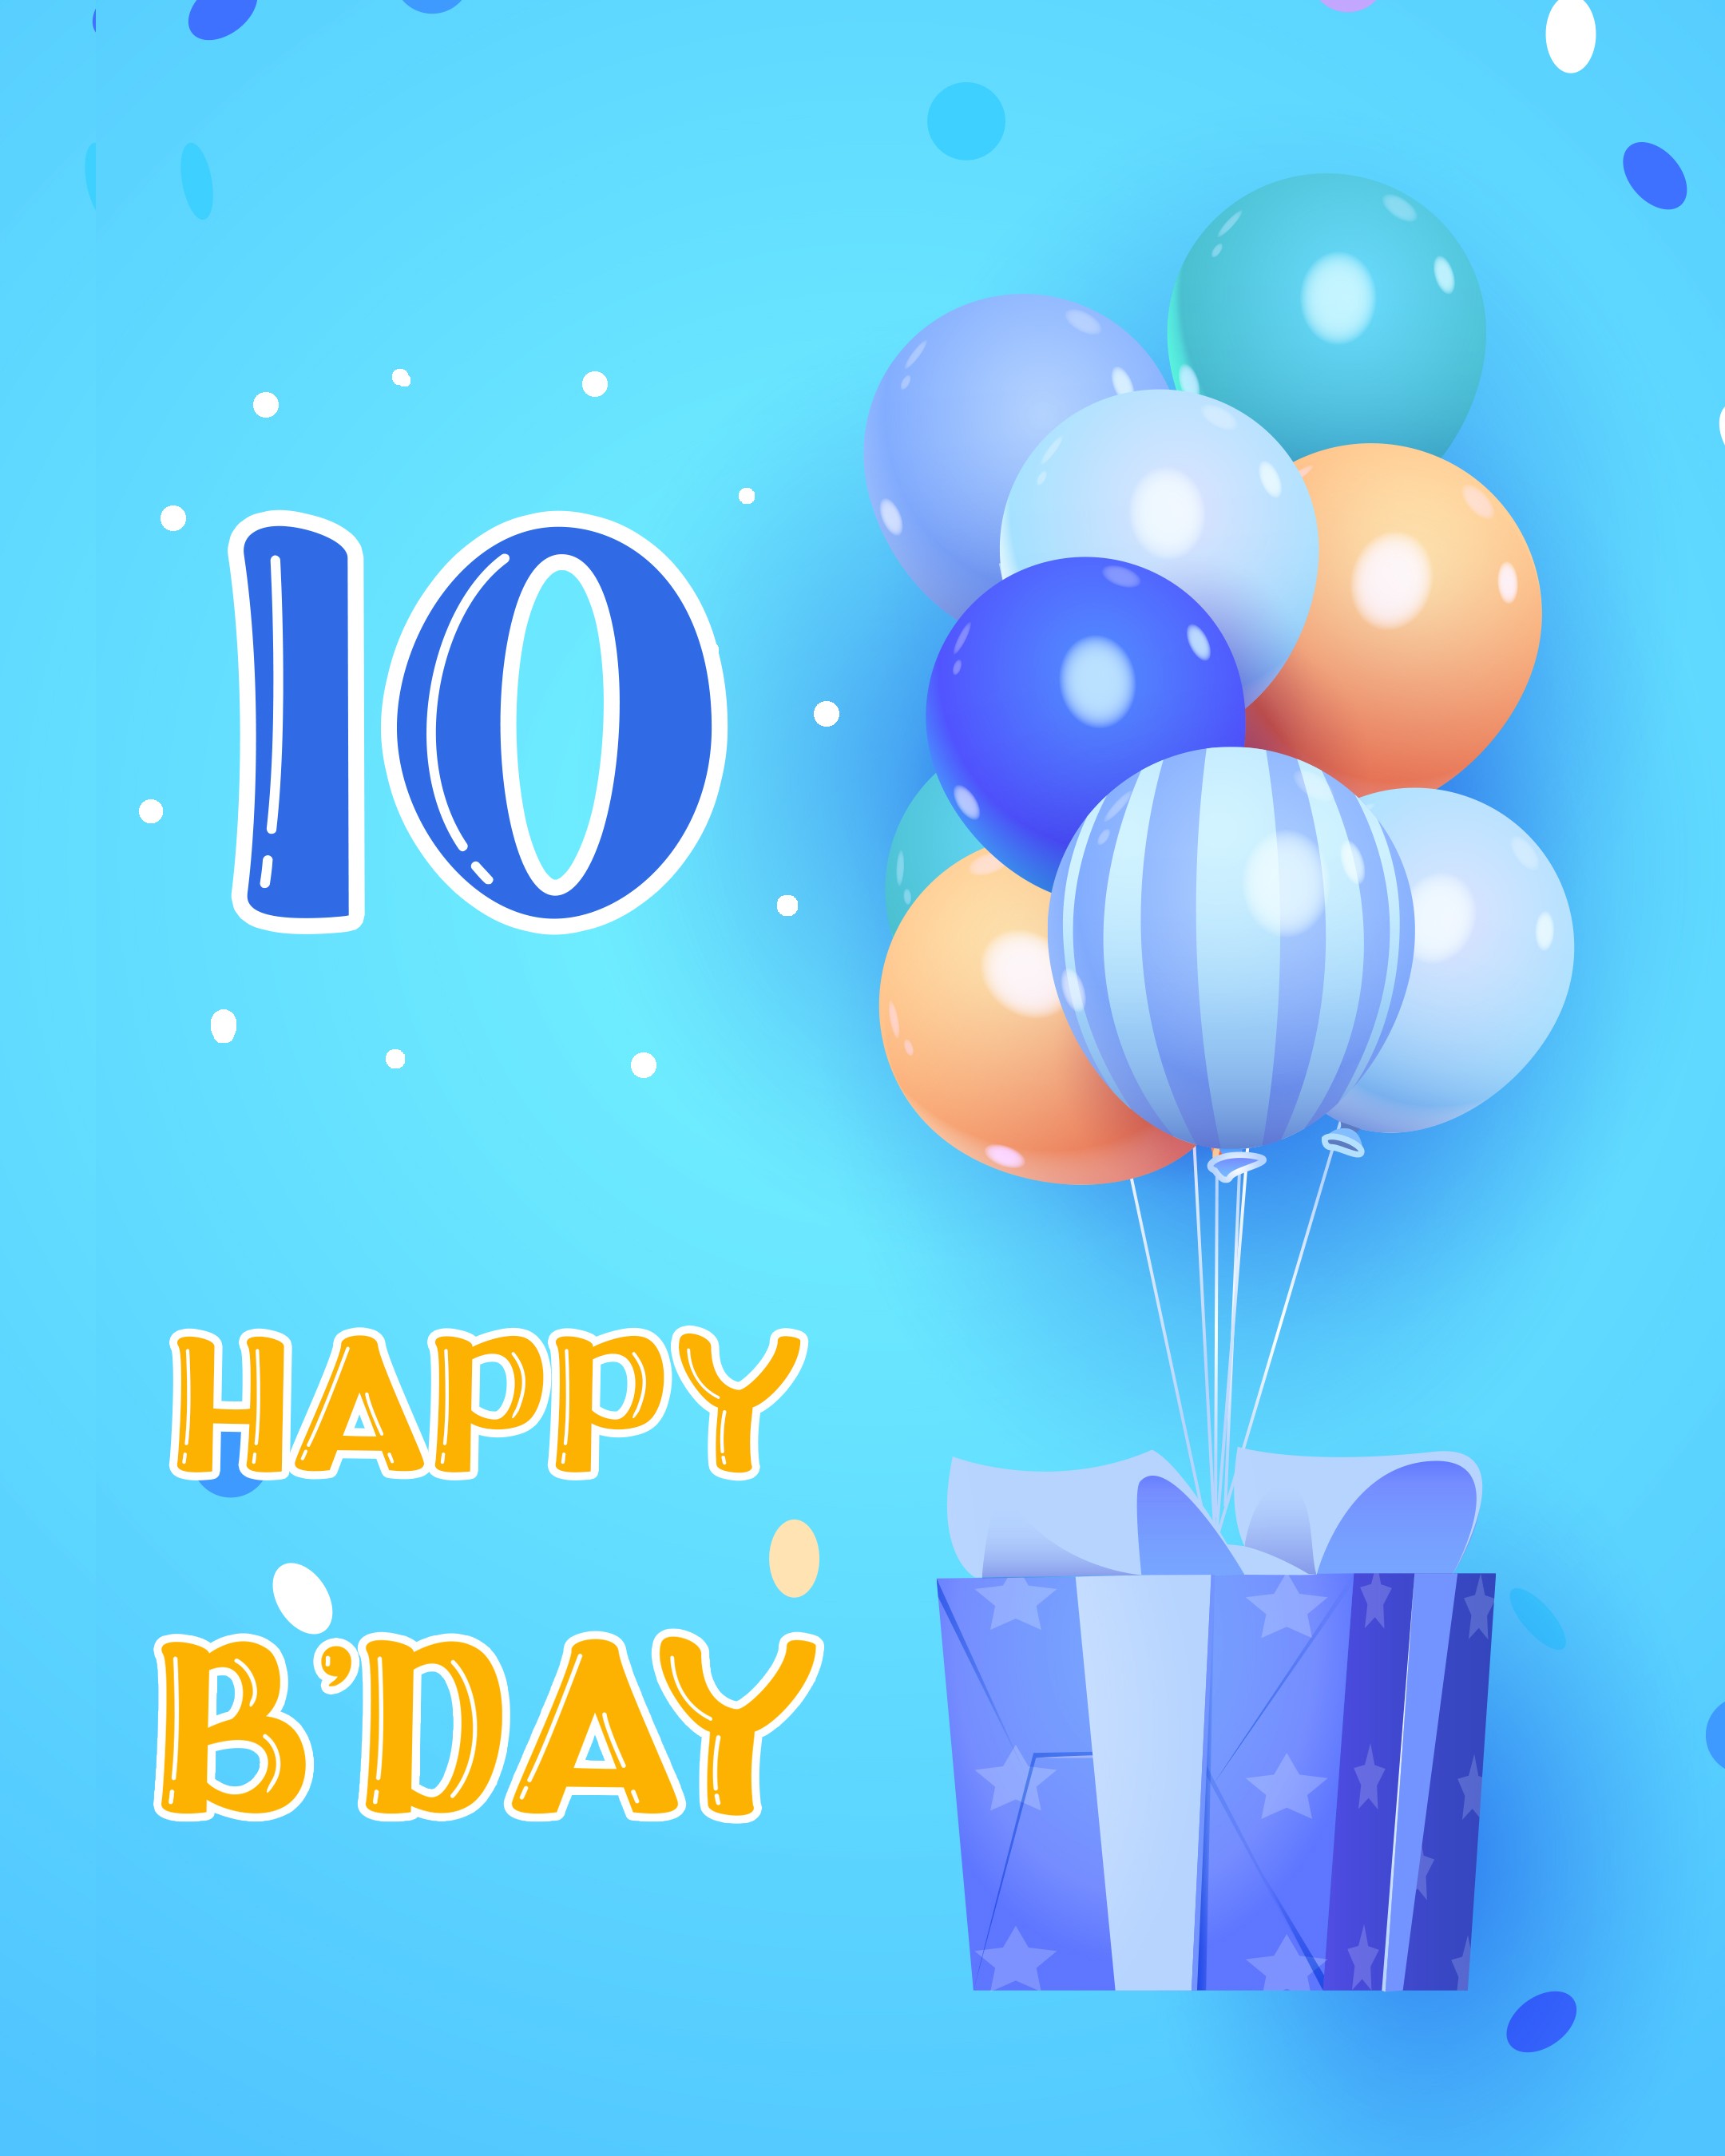 Free 10th Years Happy Birthday Image With Balloons - birthdayimg.com